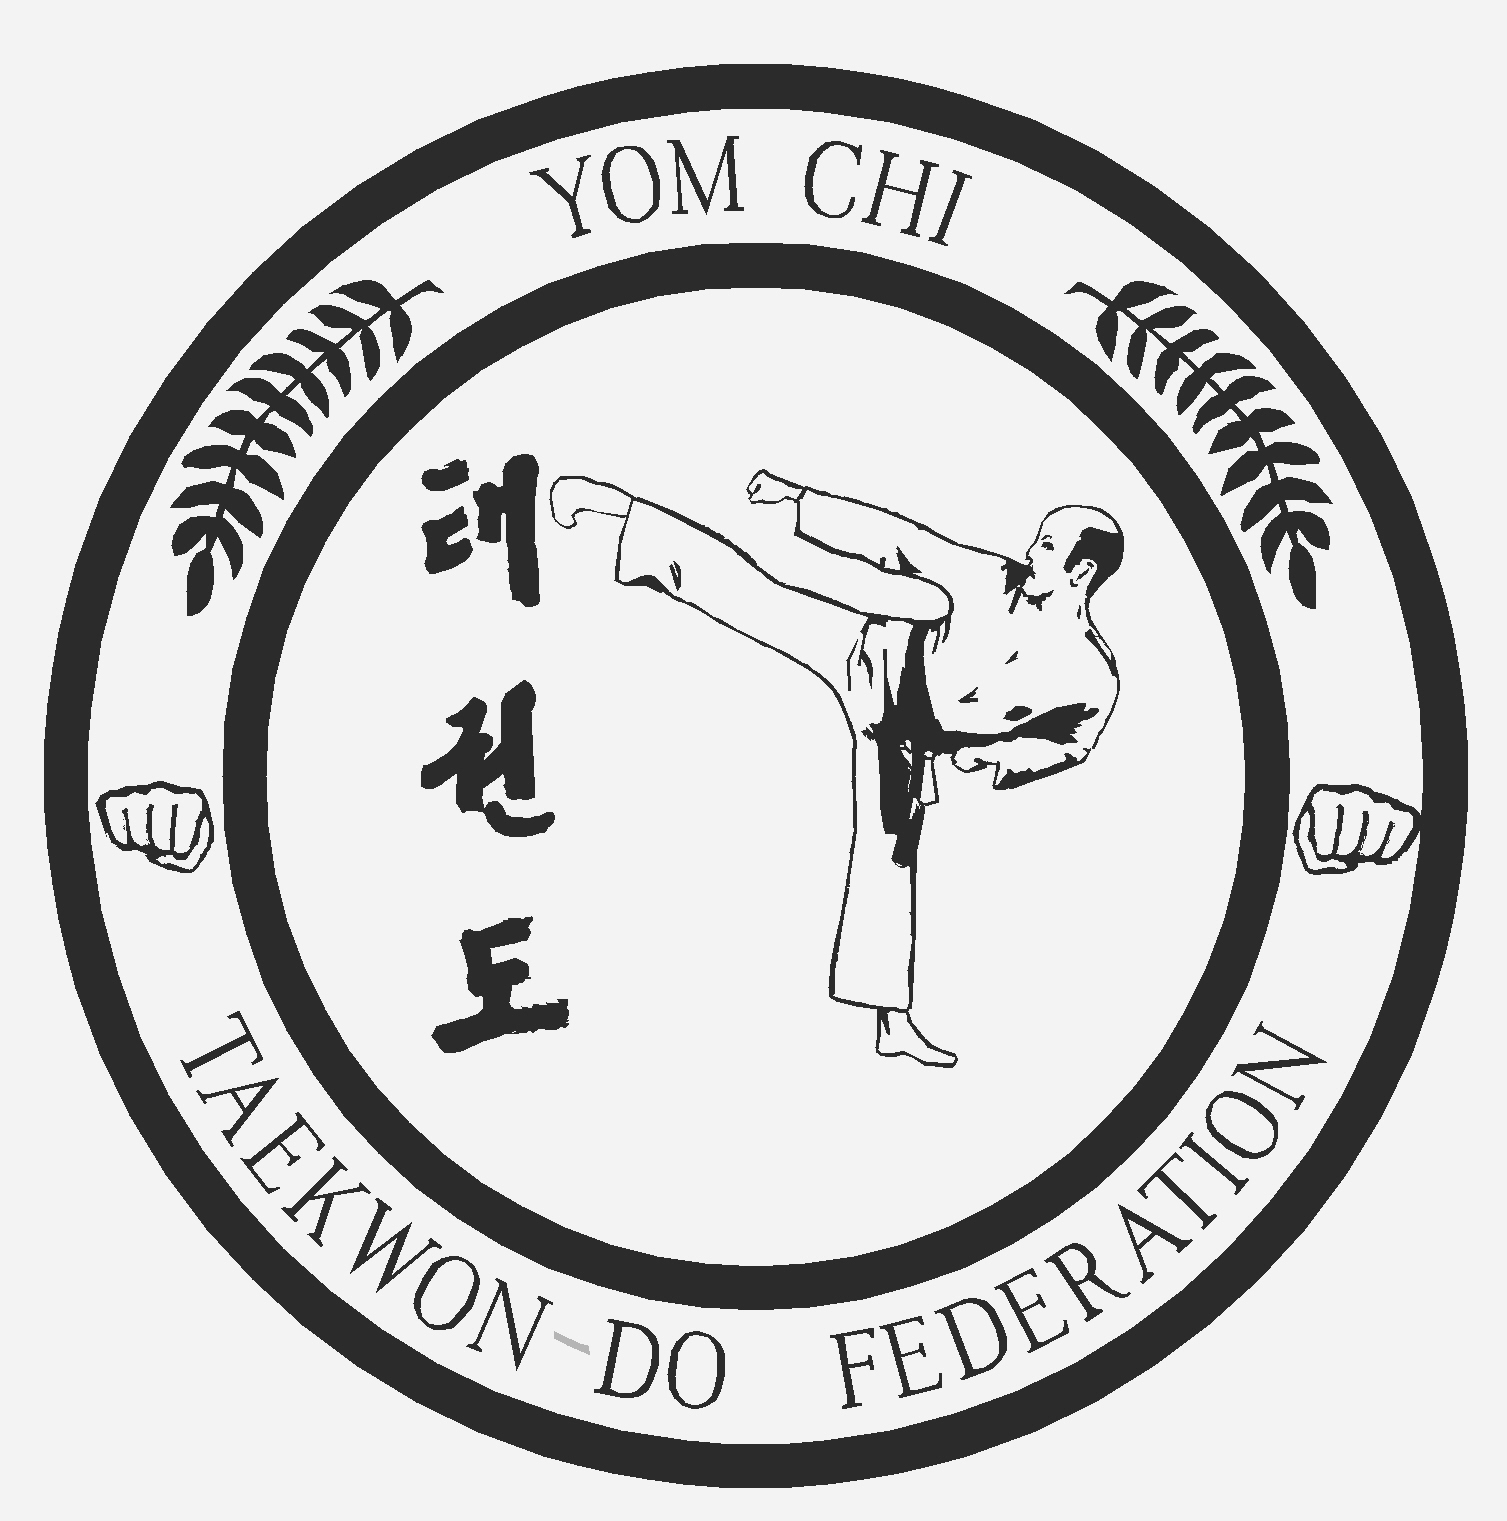 Link to Yom Chi TaeKwon-Do Federation Homepage